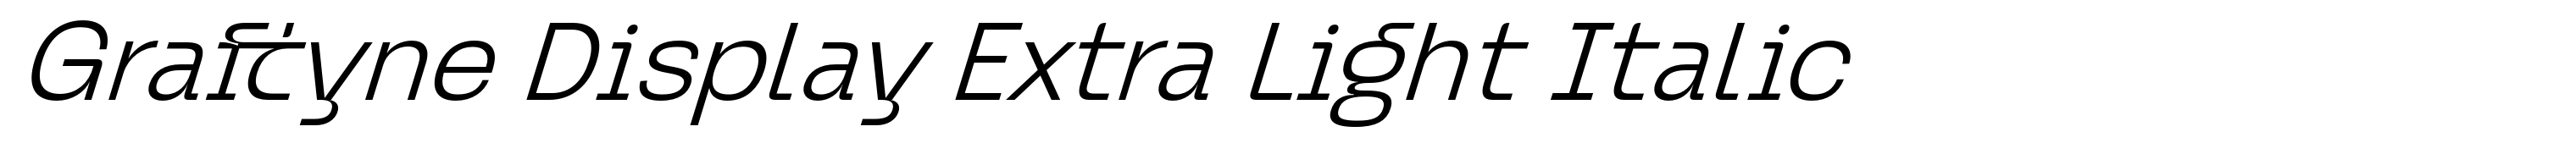 Graftyne Display Extra Light Italic